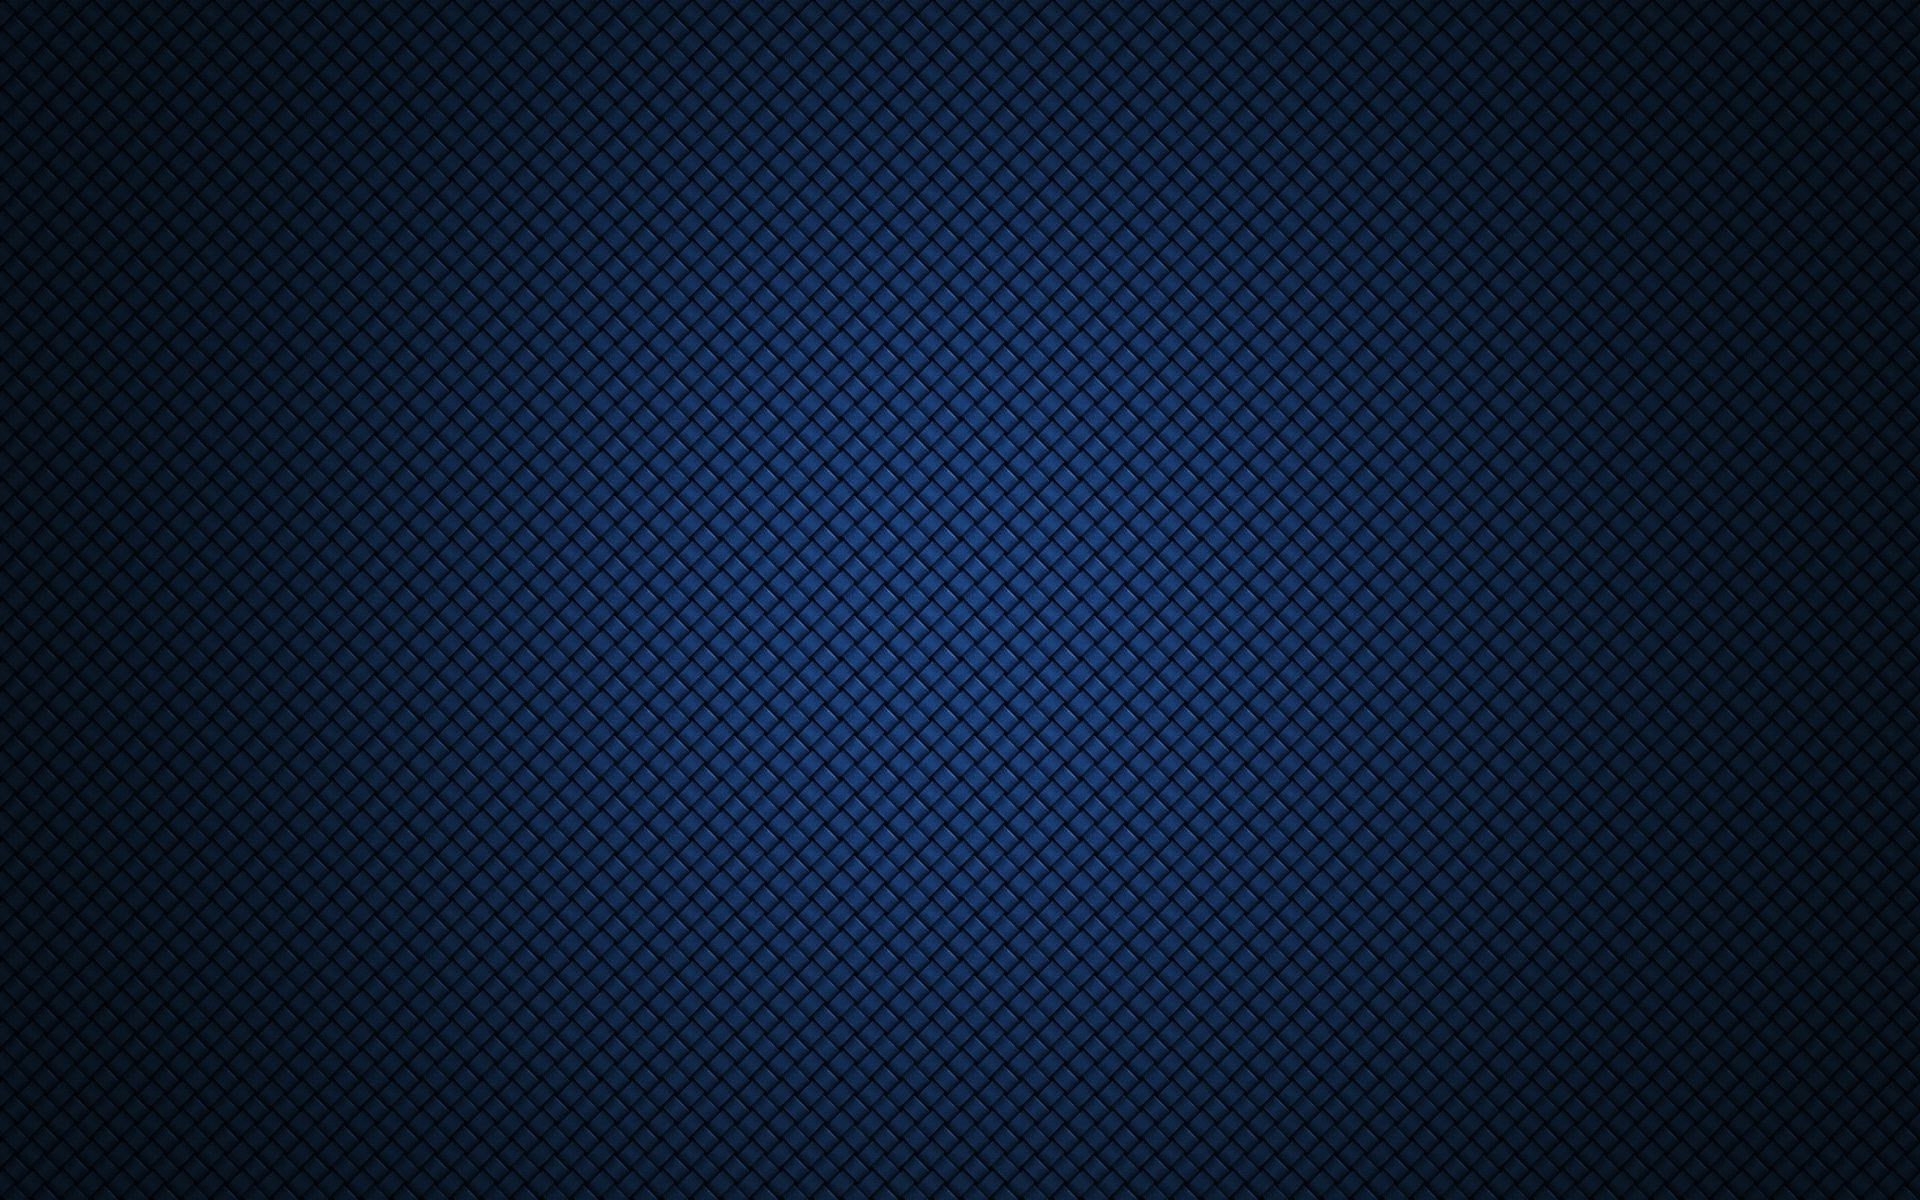  Blue  wallpaper  HD    Download free beautiful wallpapers  